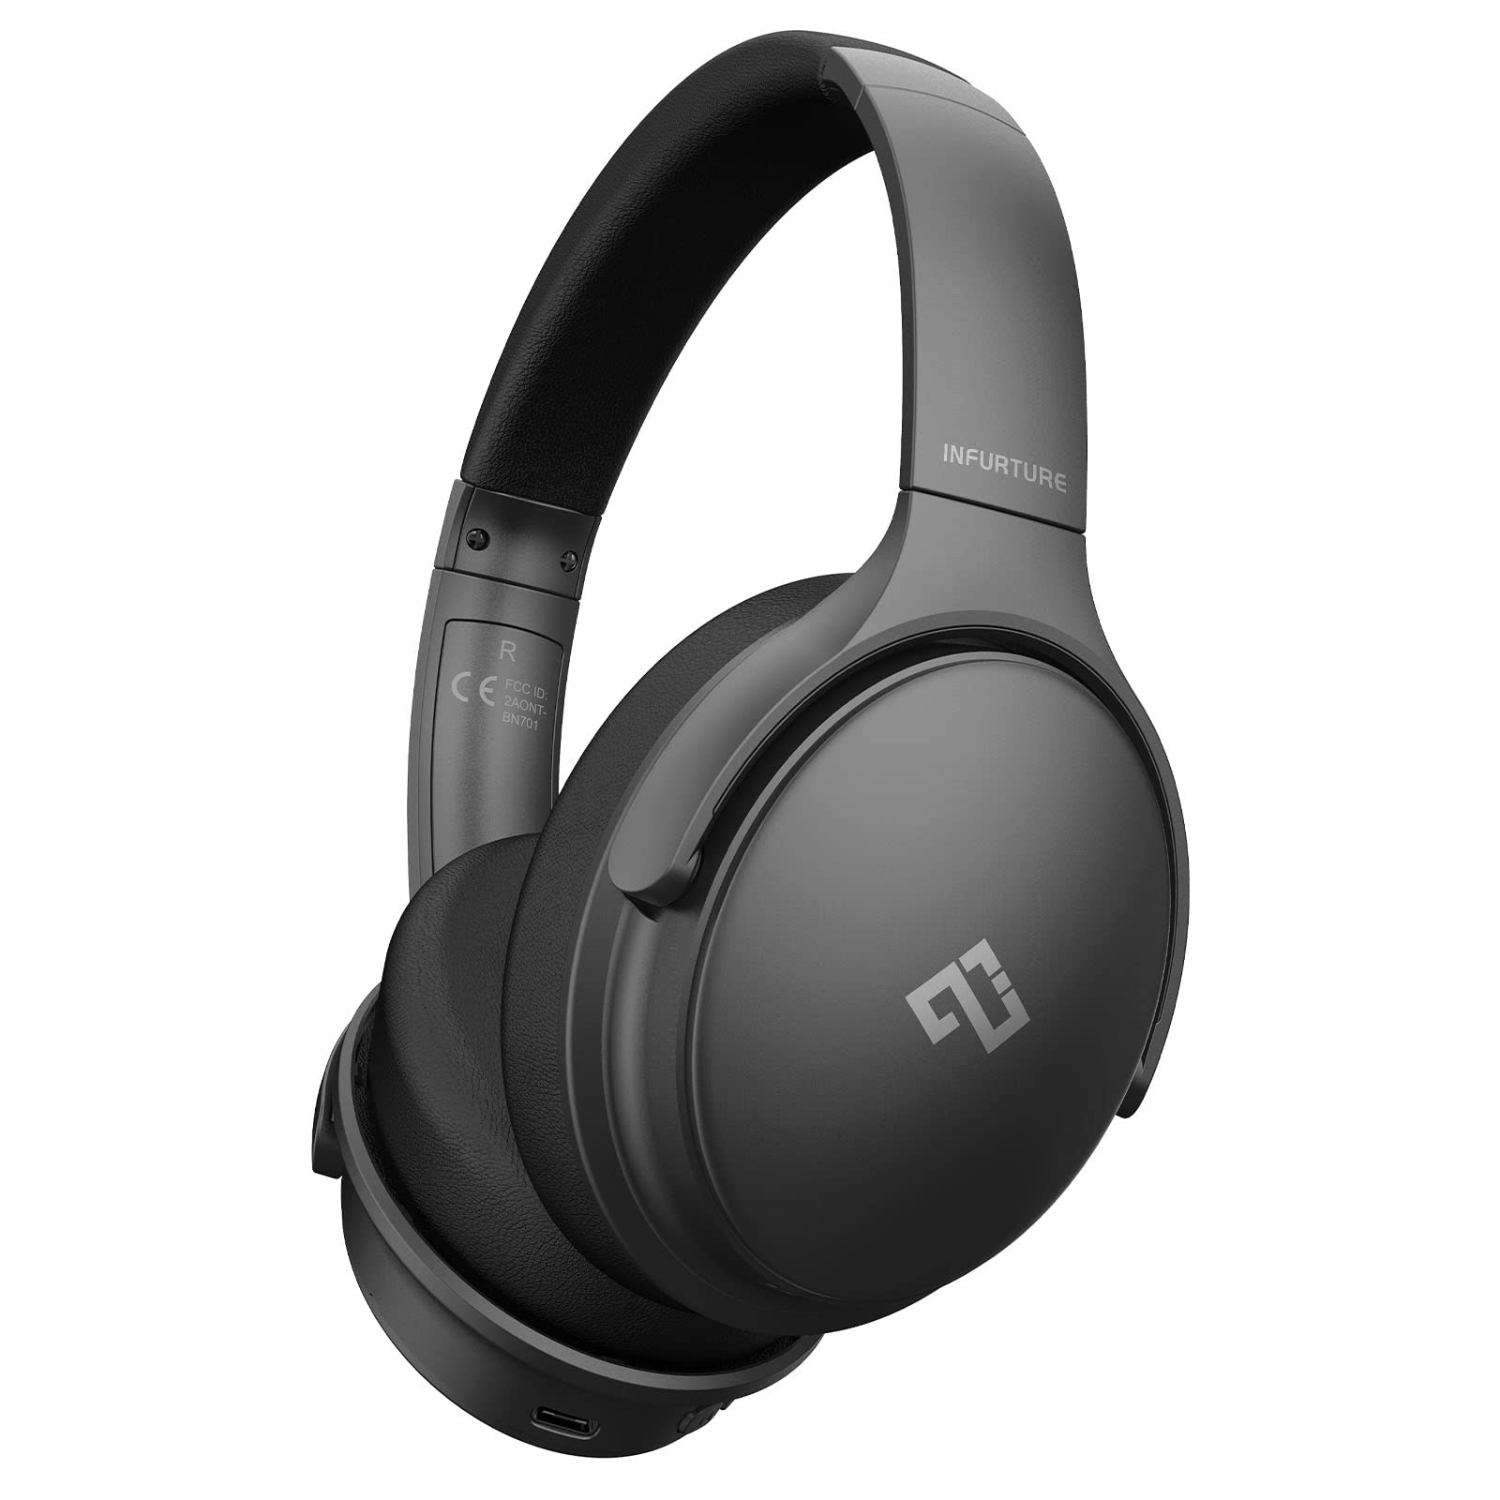 INFURTURE H1 Active Noise Cancelling Headphones with Microphone, Wireless Over Ear Bluetooth Headphones, 3D Deep Bass, Memor